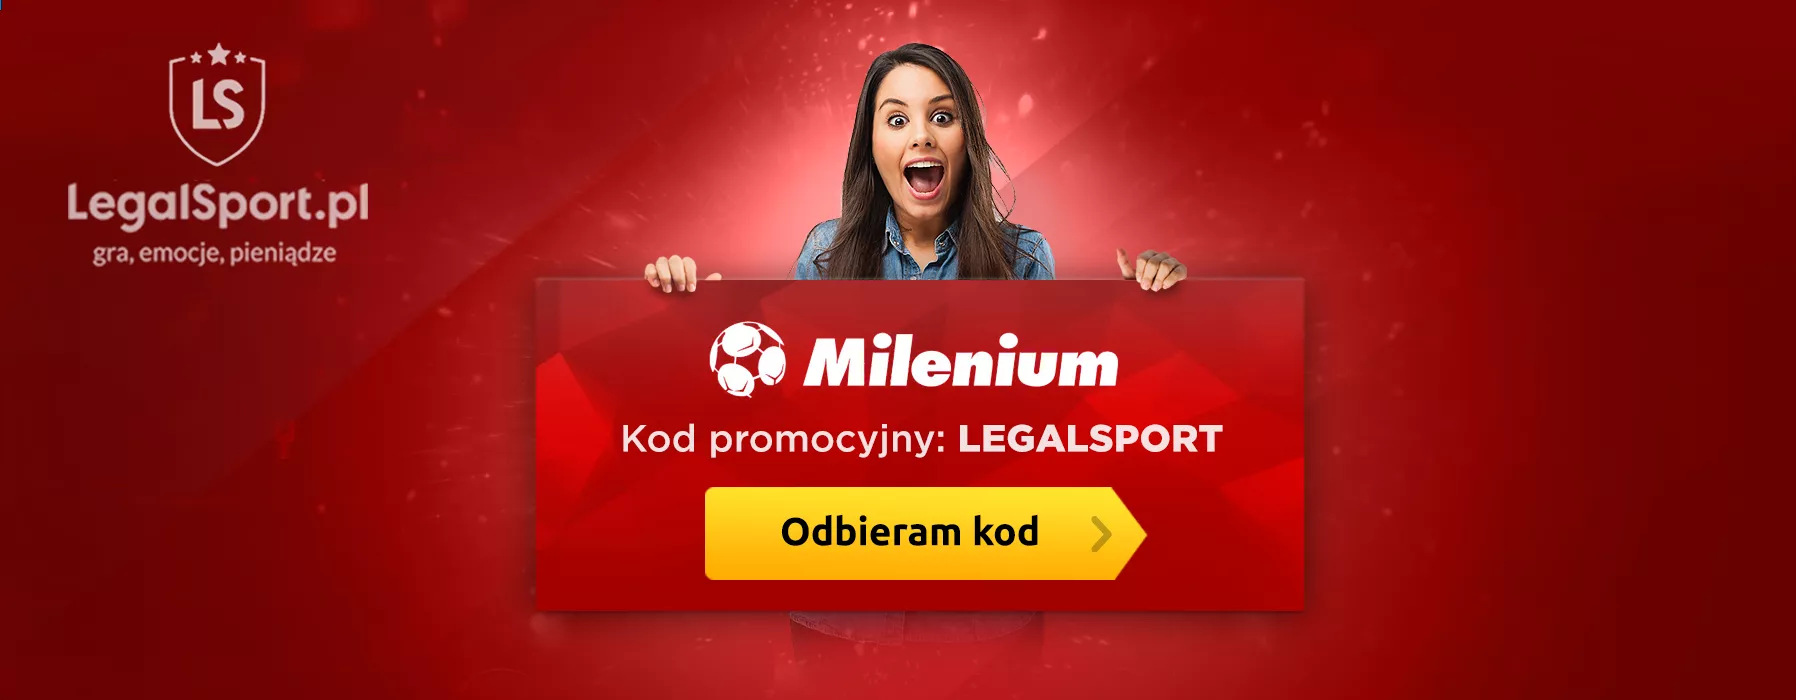 Milenium kod promocyjny LEGALSPORT do bonusu 1670 zł na start - infografika